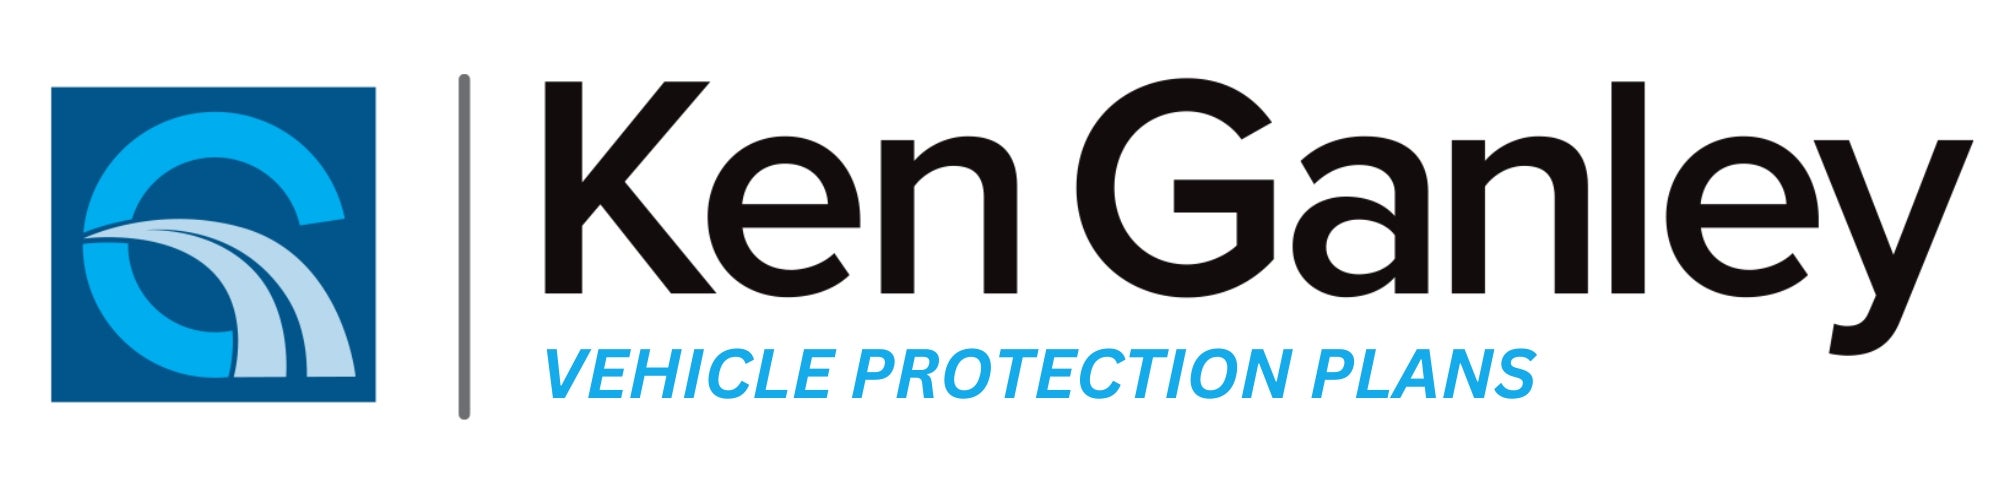 Ken Ganley - Vehicle Protection Plans